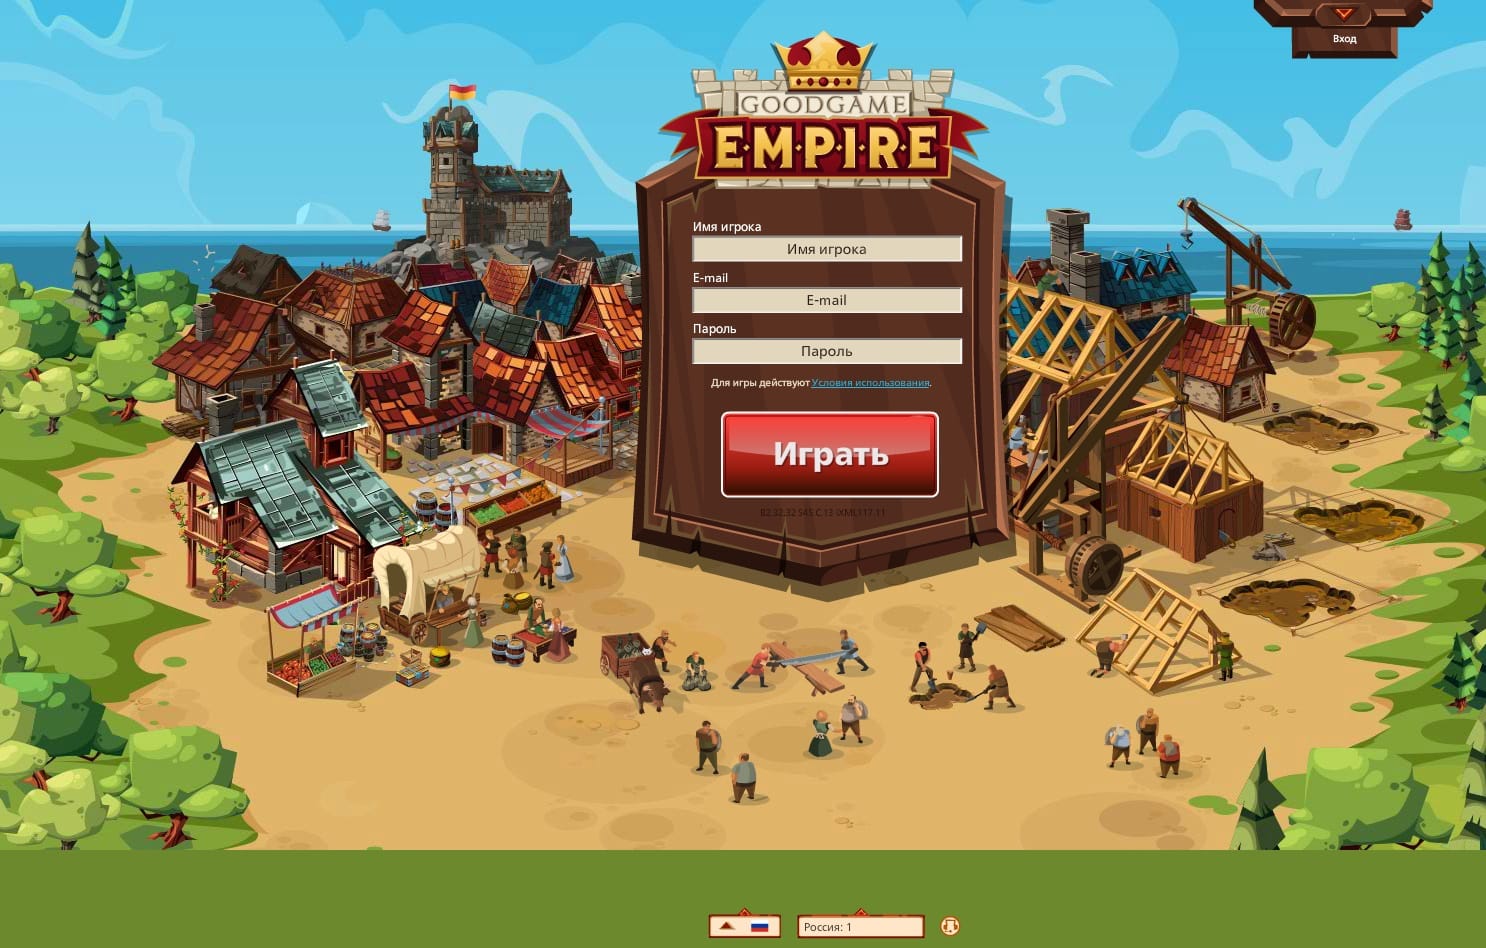 Войти в игру Goodgame Empire Goodgame Empire регистрация